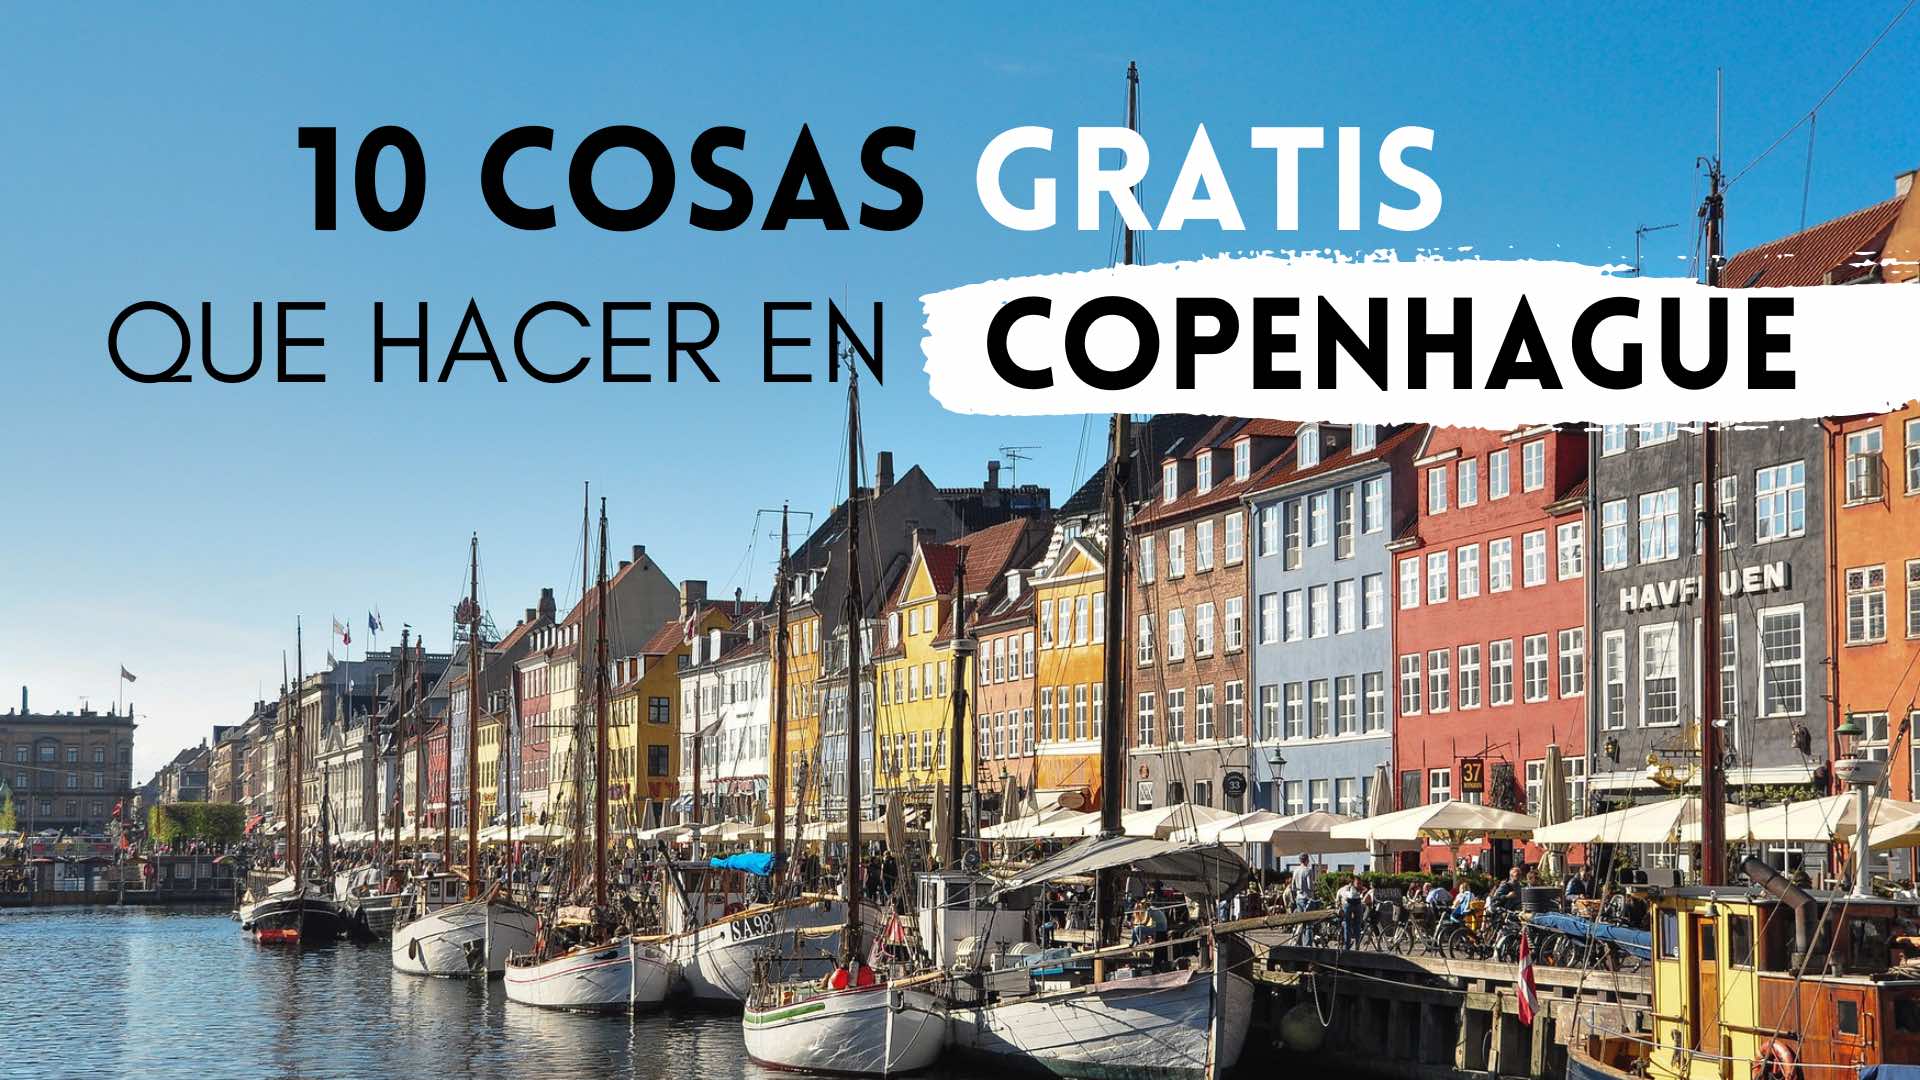 10 cosas gratis que hacer en Copenhague | Pasaporteandonos